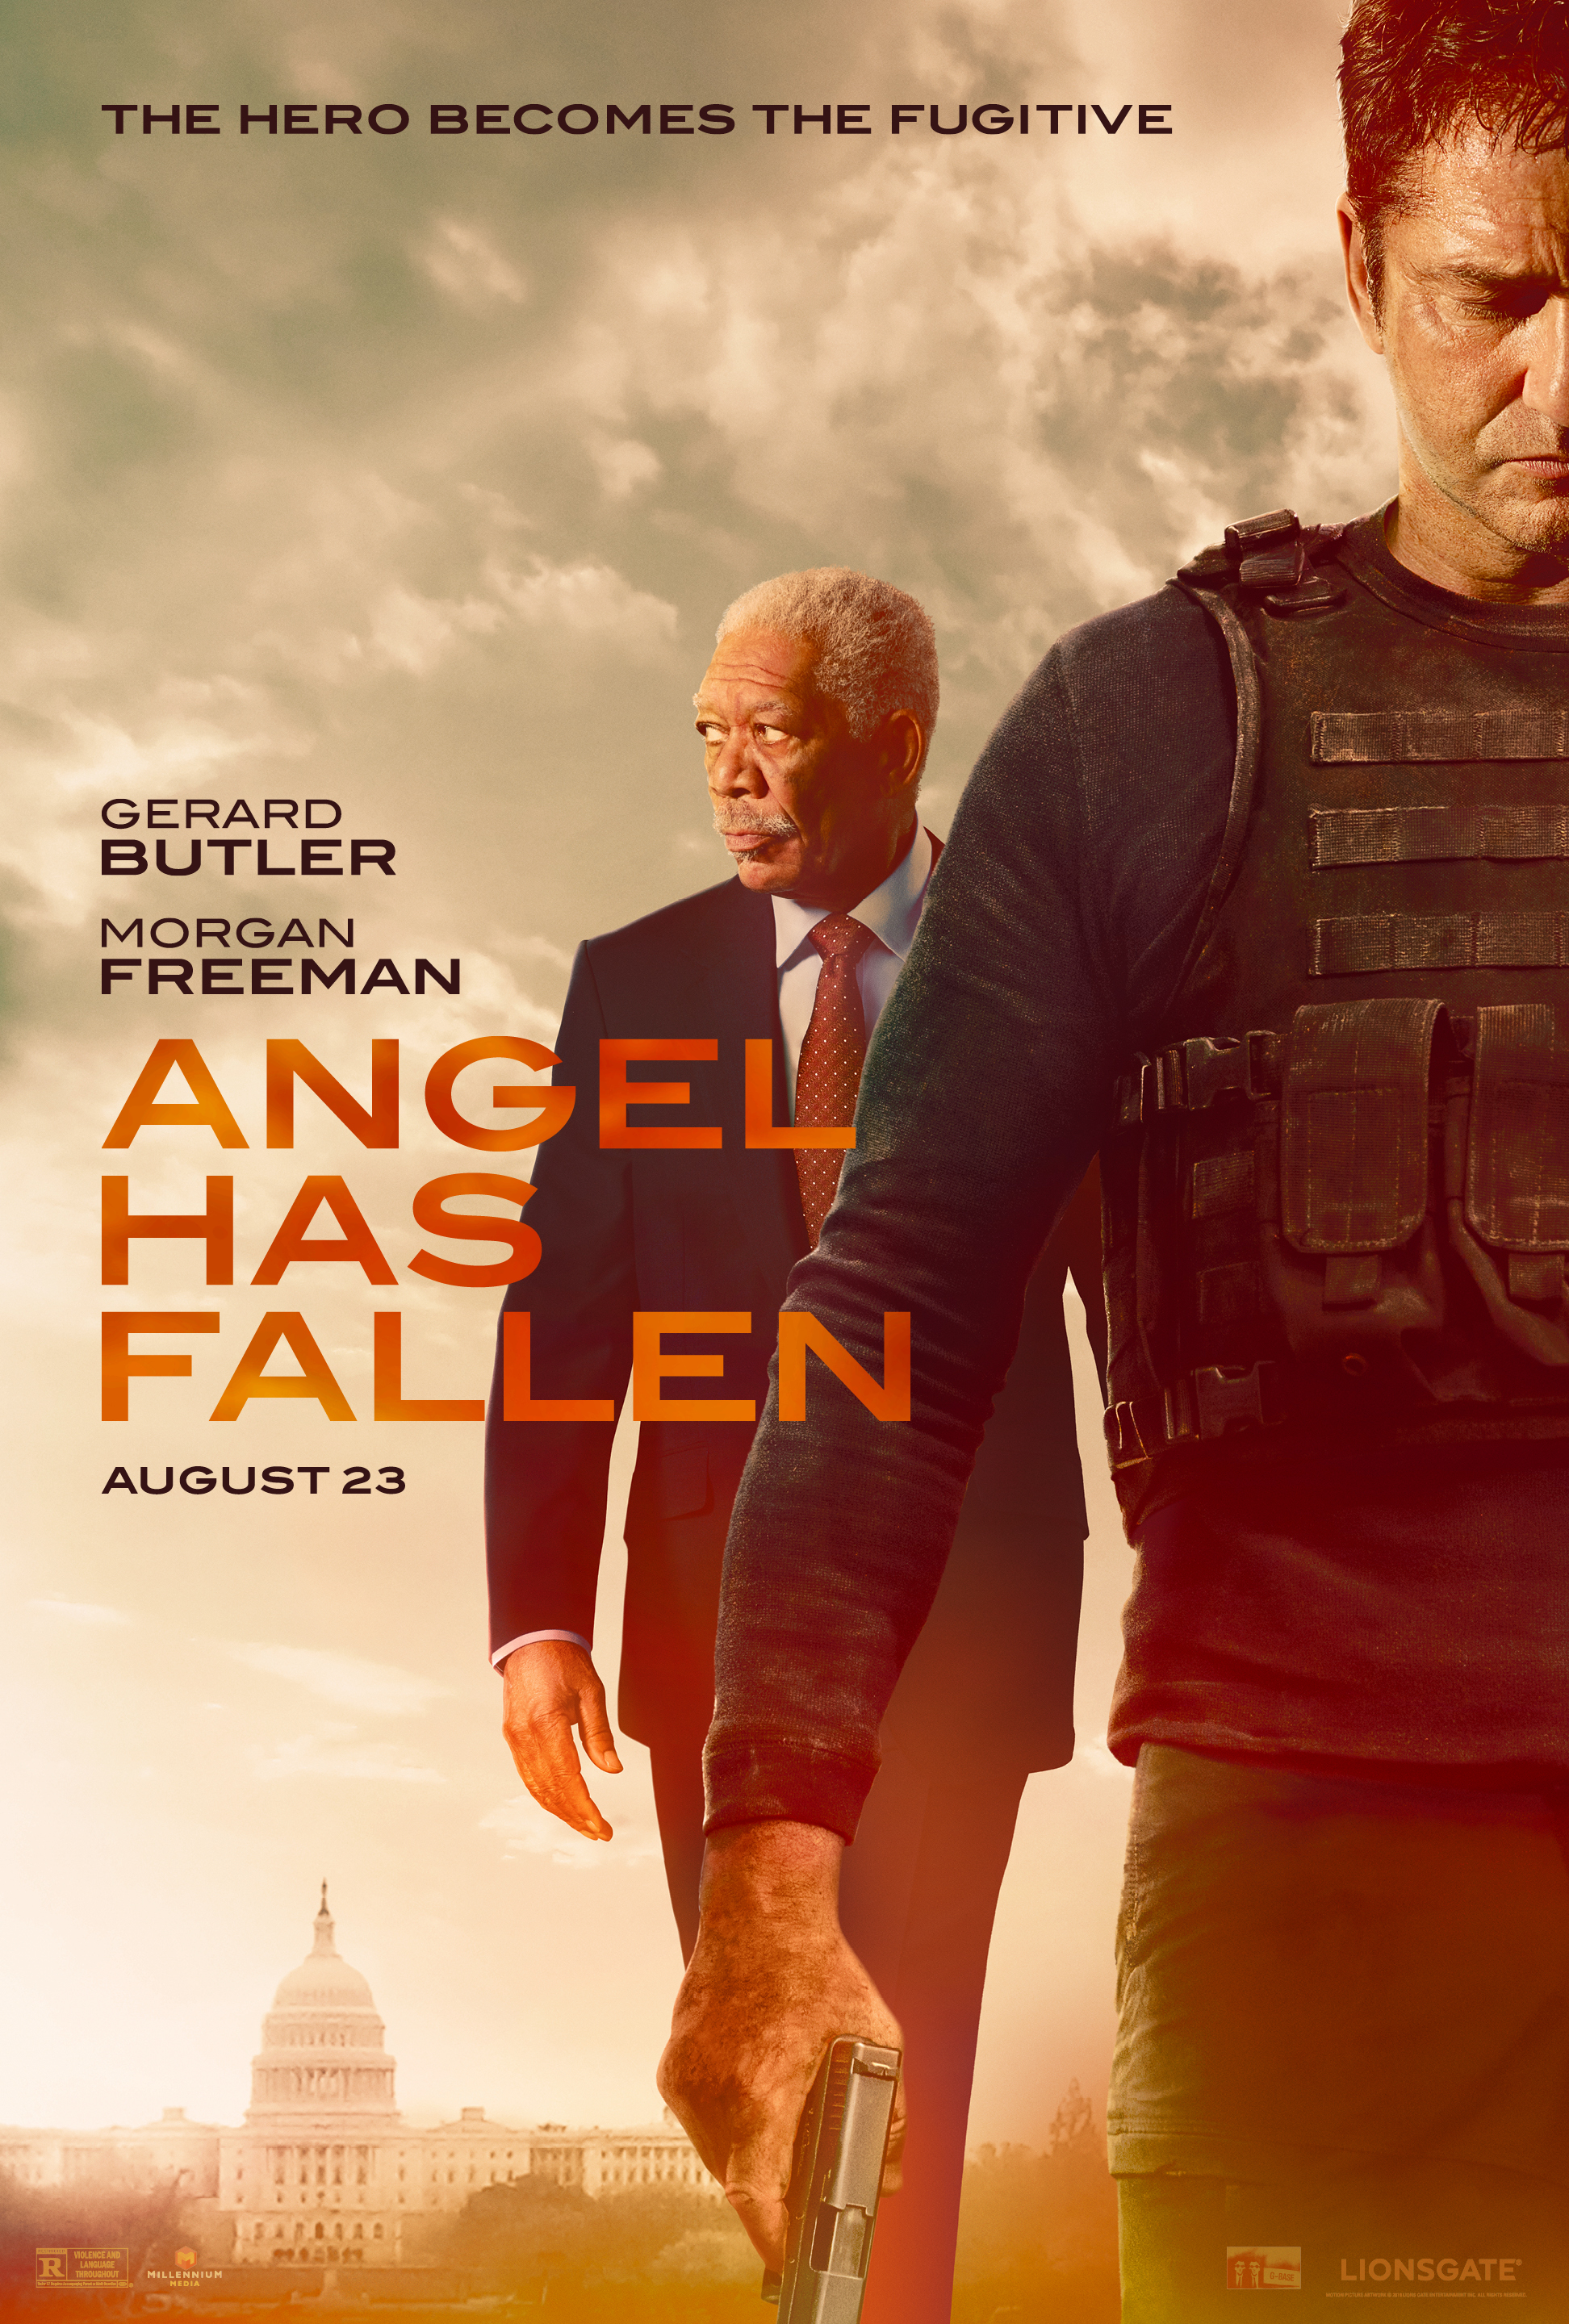 Stiahni si Filmy s titulkama Pad andela / Angel Has Fallen (2019)[WebRip][1080p] = CSFD 63%